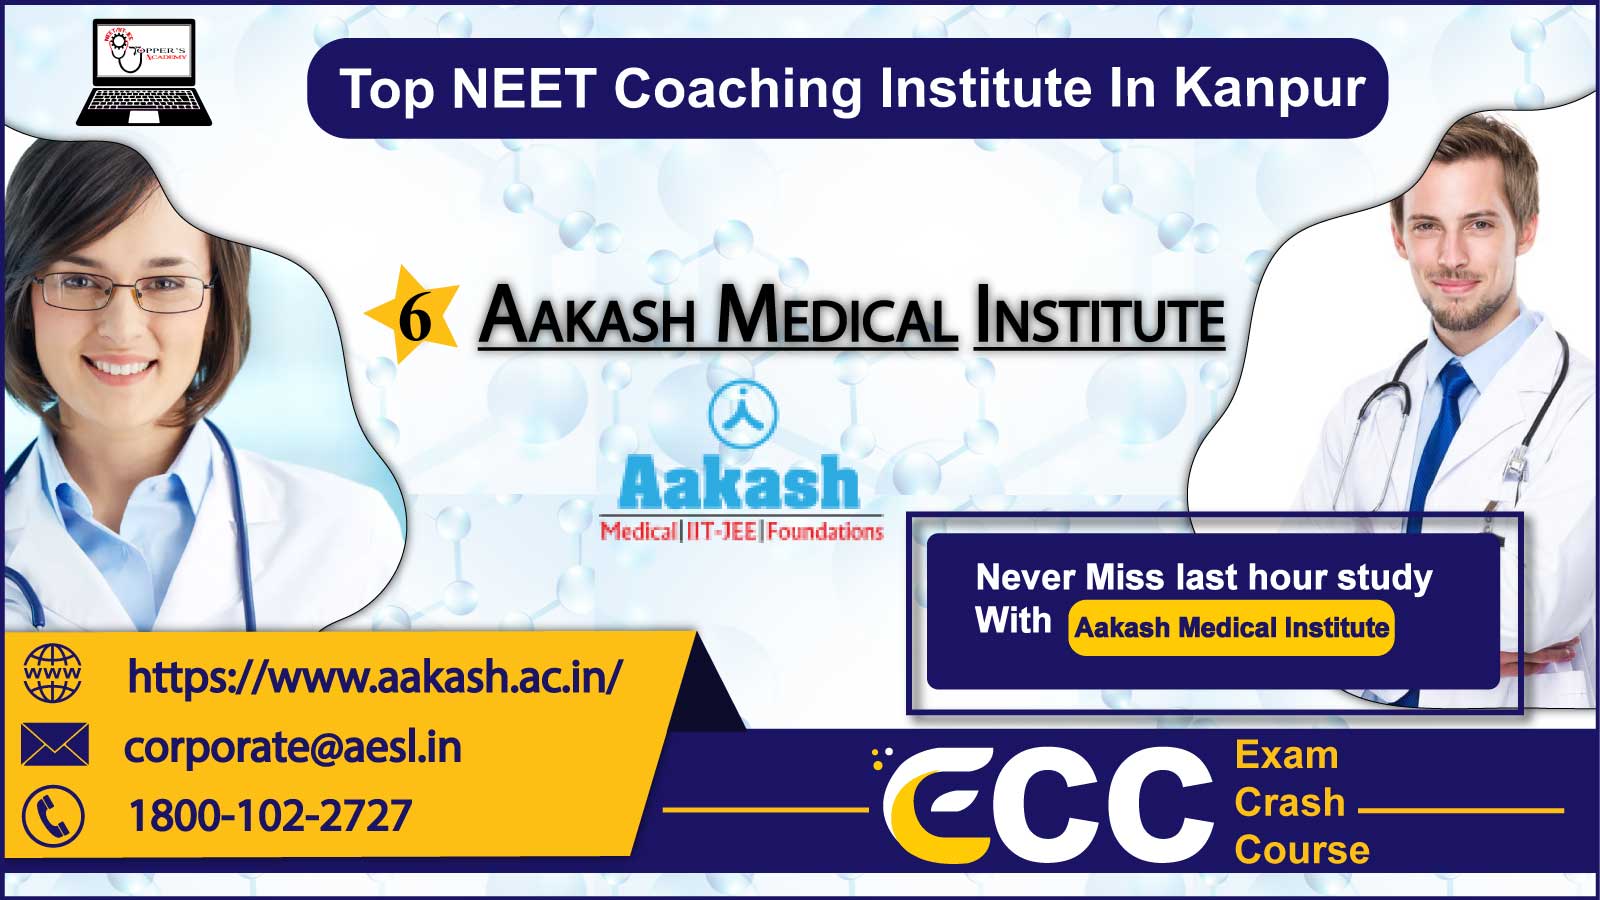 Aakash NEET Coaching Institute In Kanpur